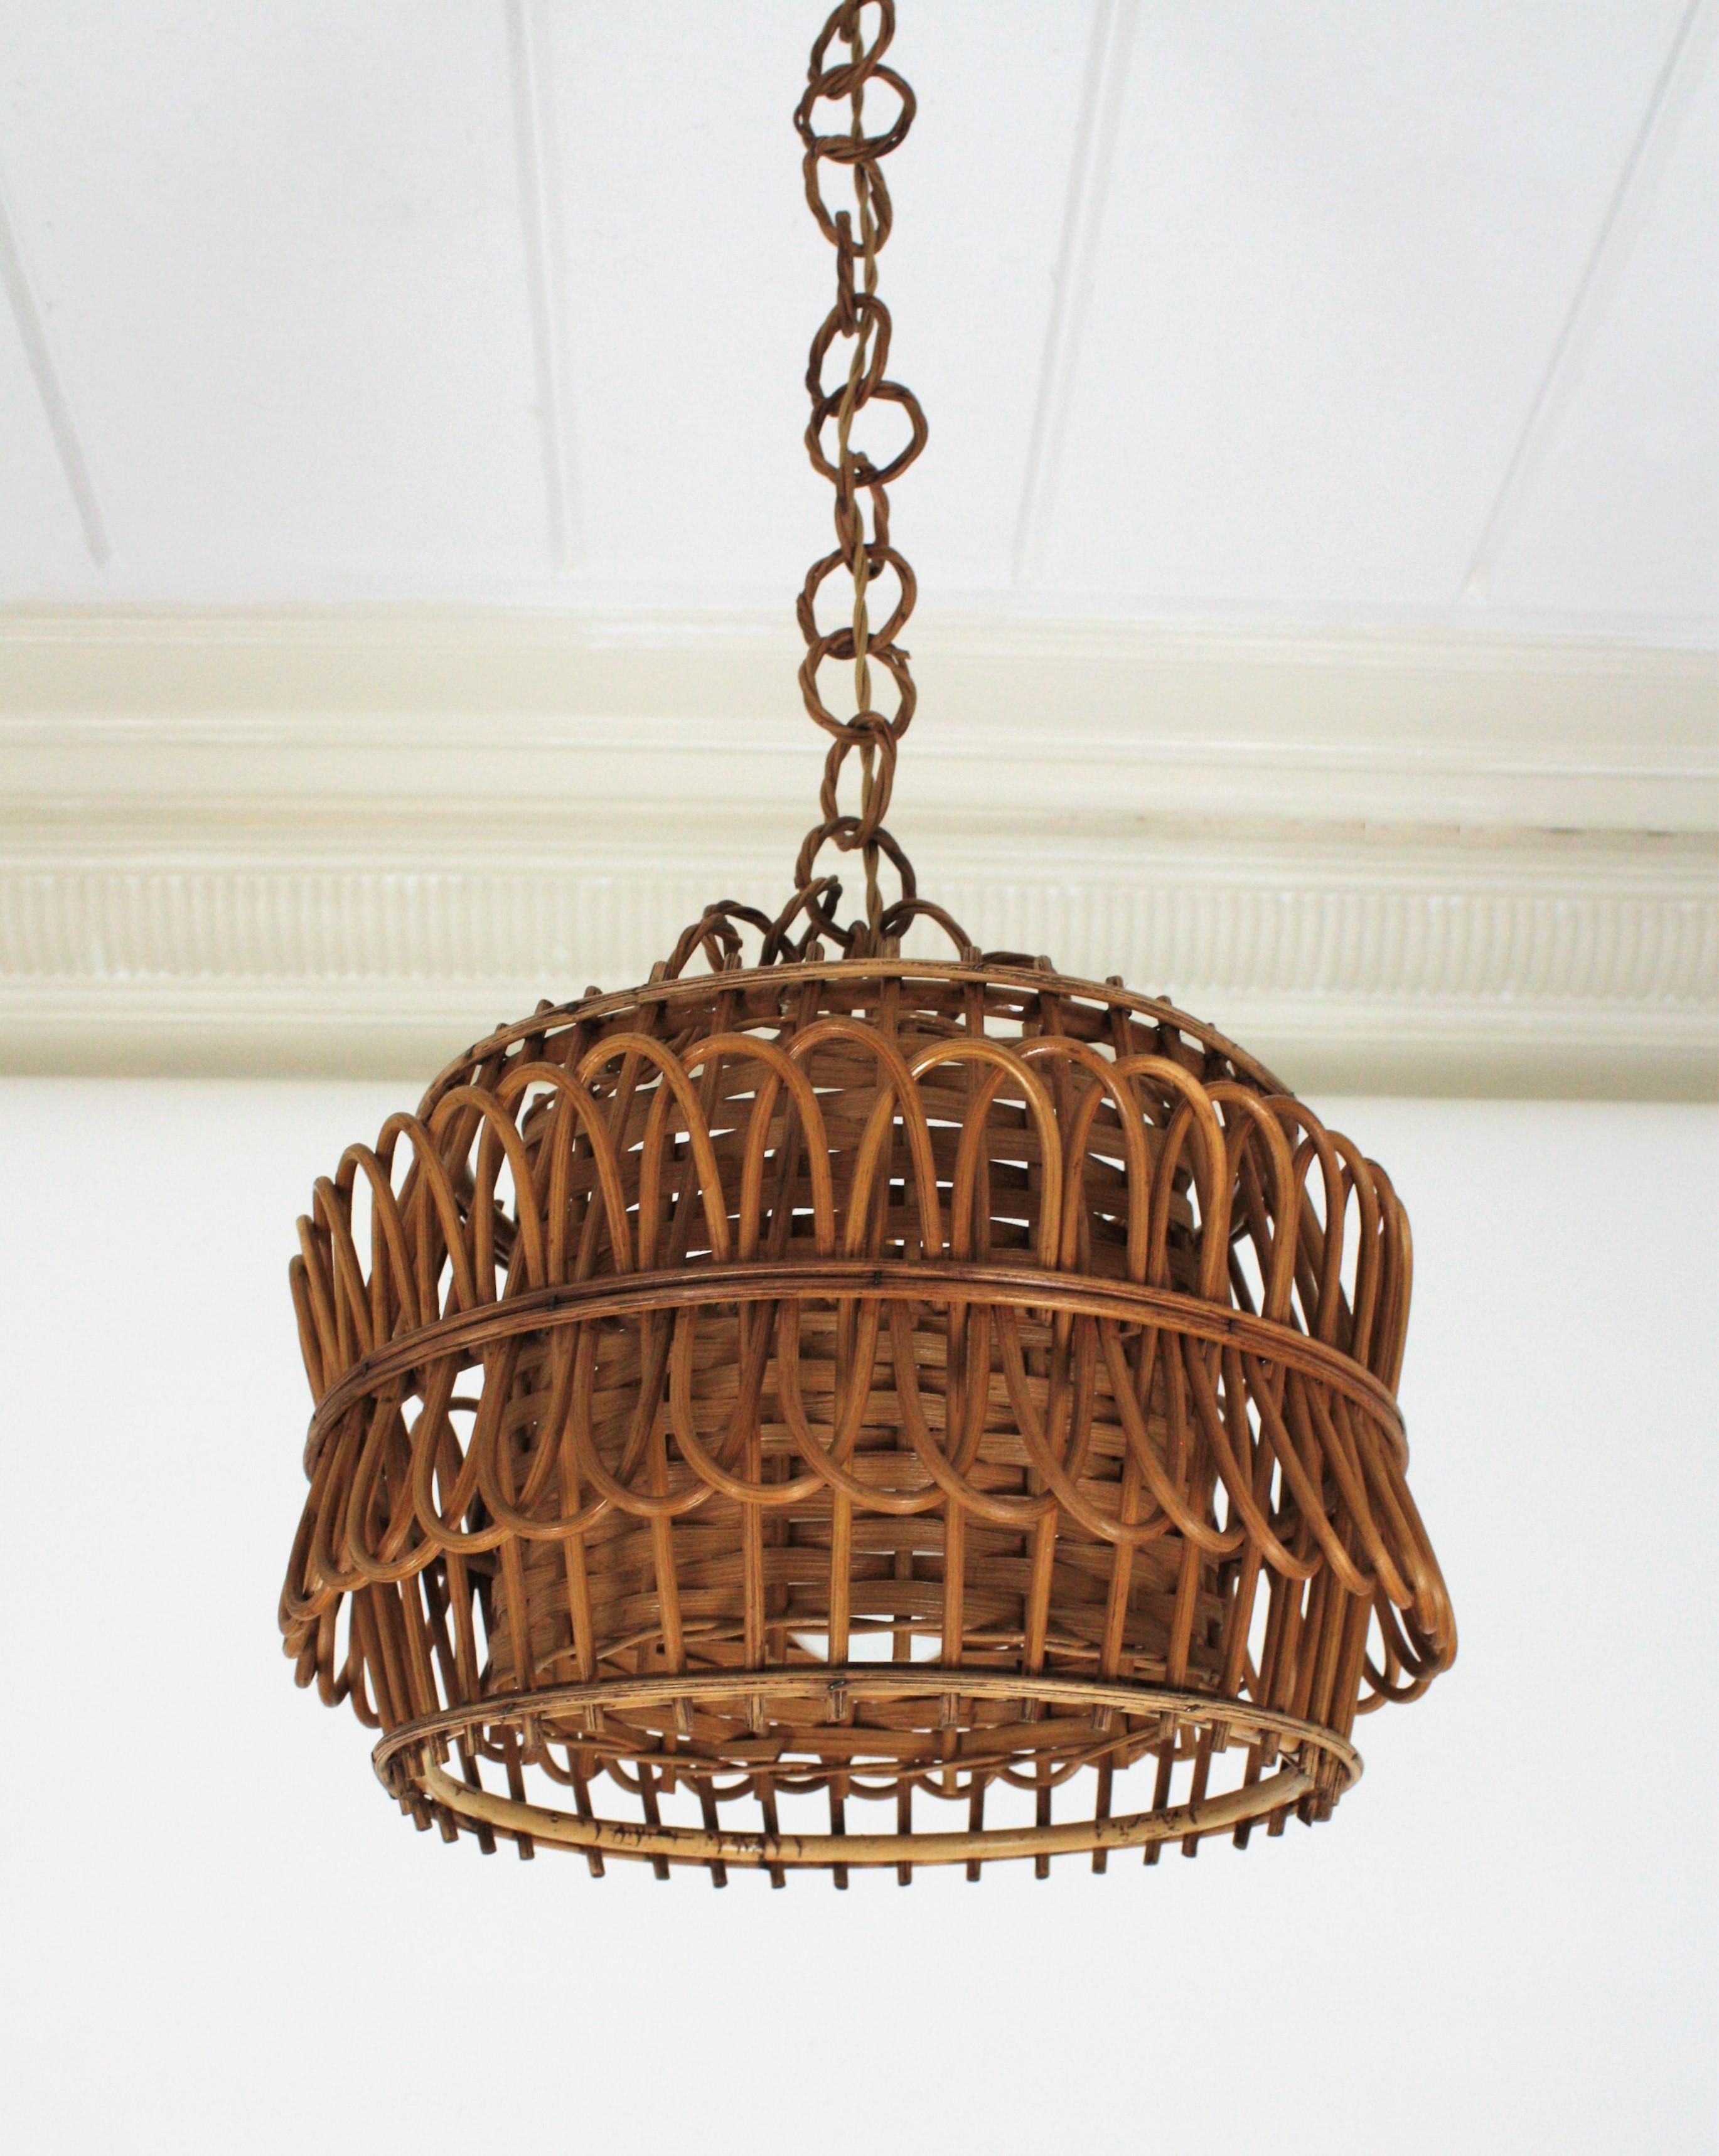 Spanish Modernist Rattan Pendant Lamp / Hanging Light with Woven Wicker Shade 1